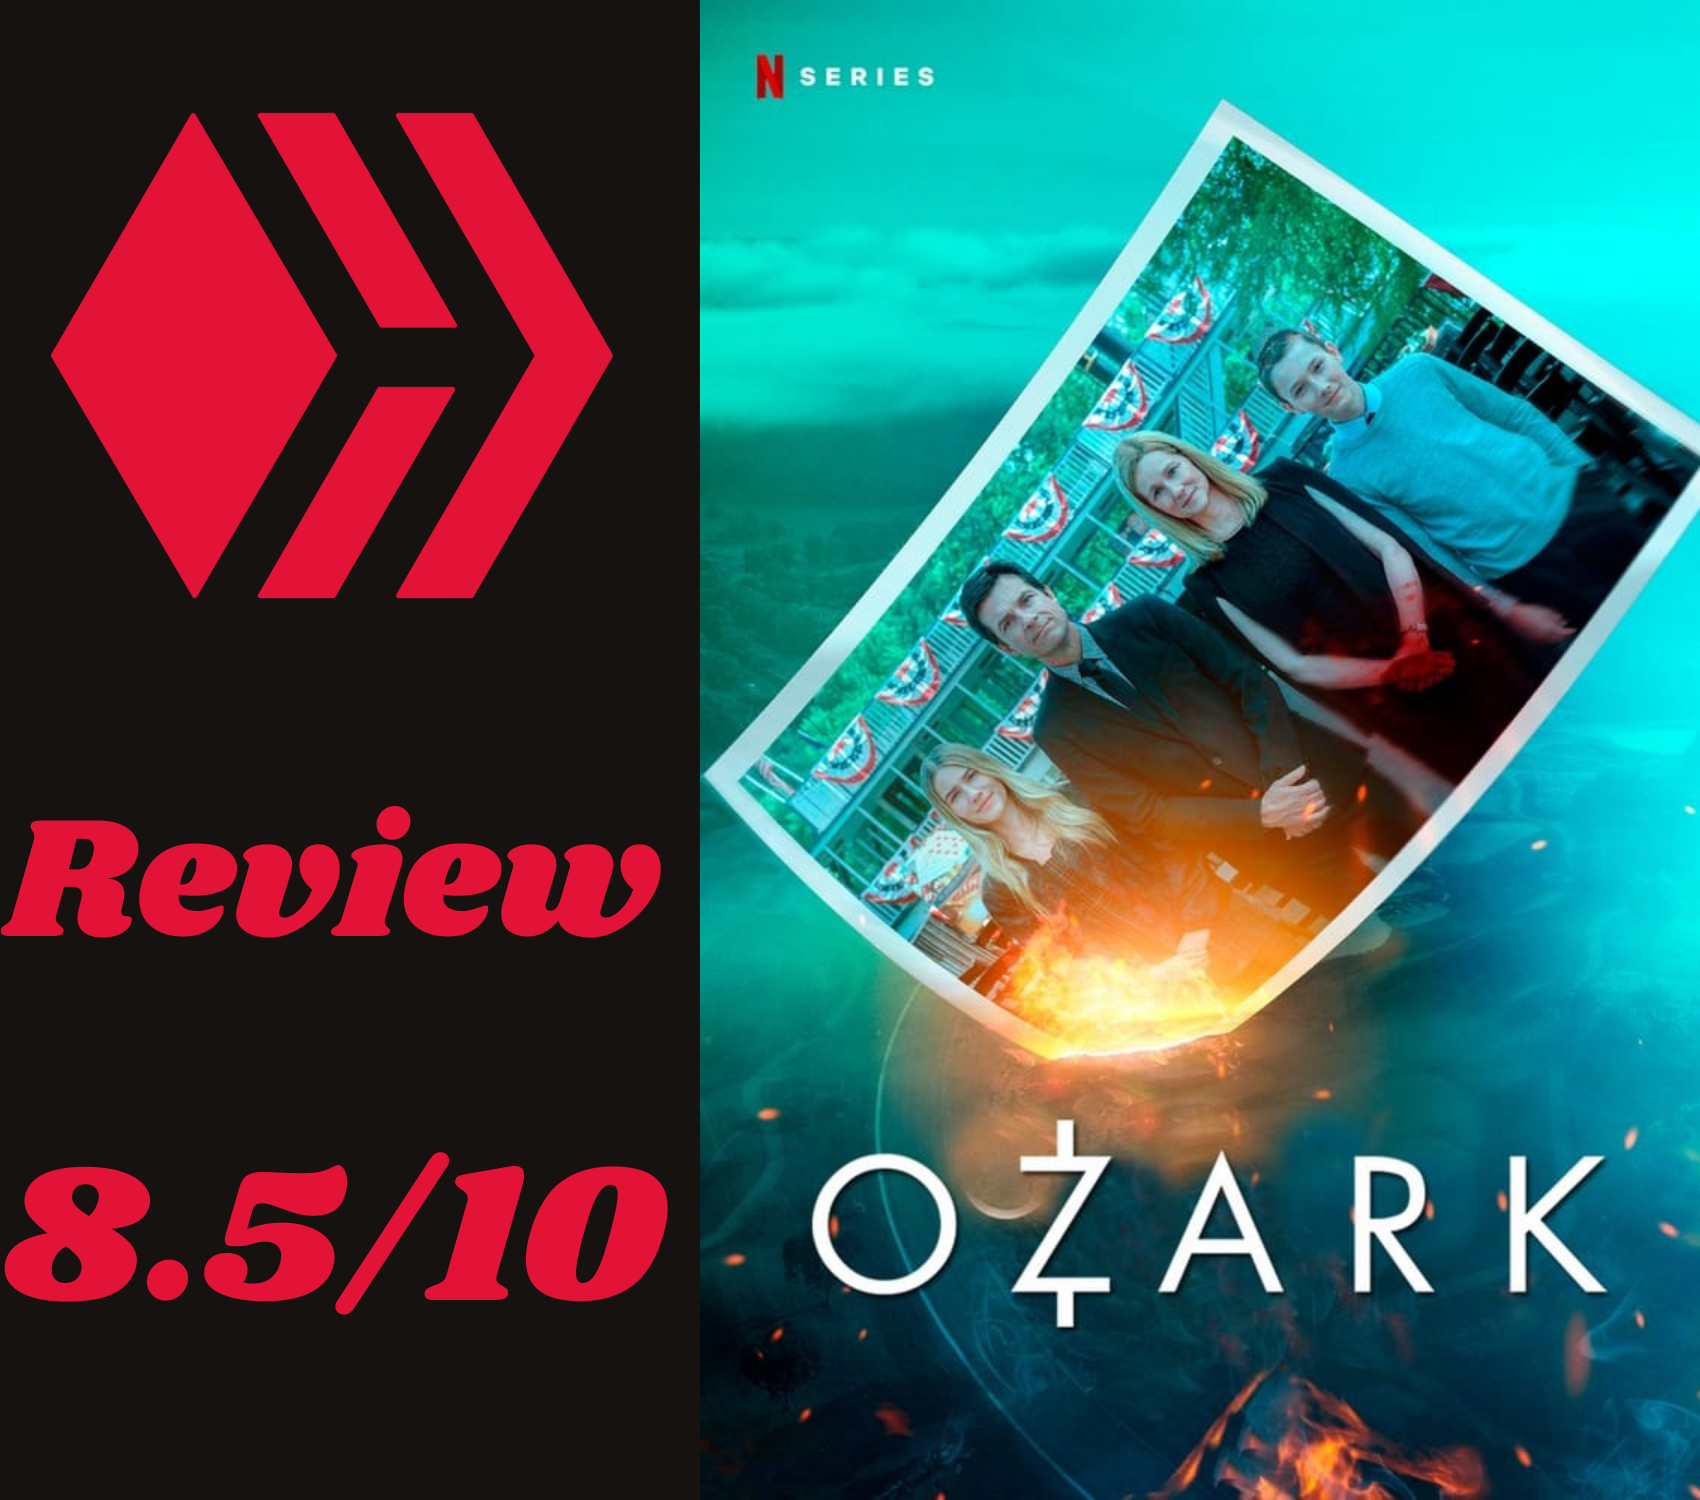 hive dedicatedguy movies and series review ozark season 4 part 2.png